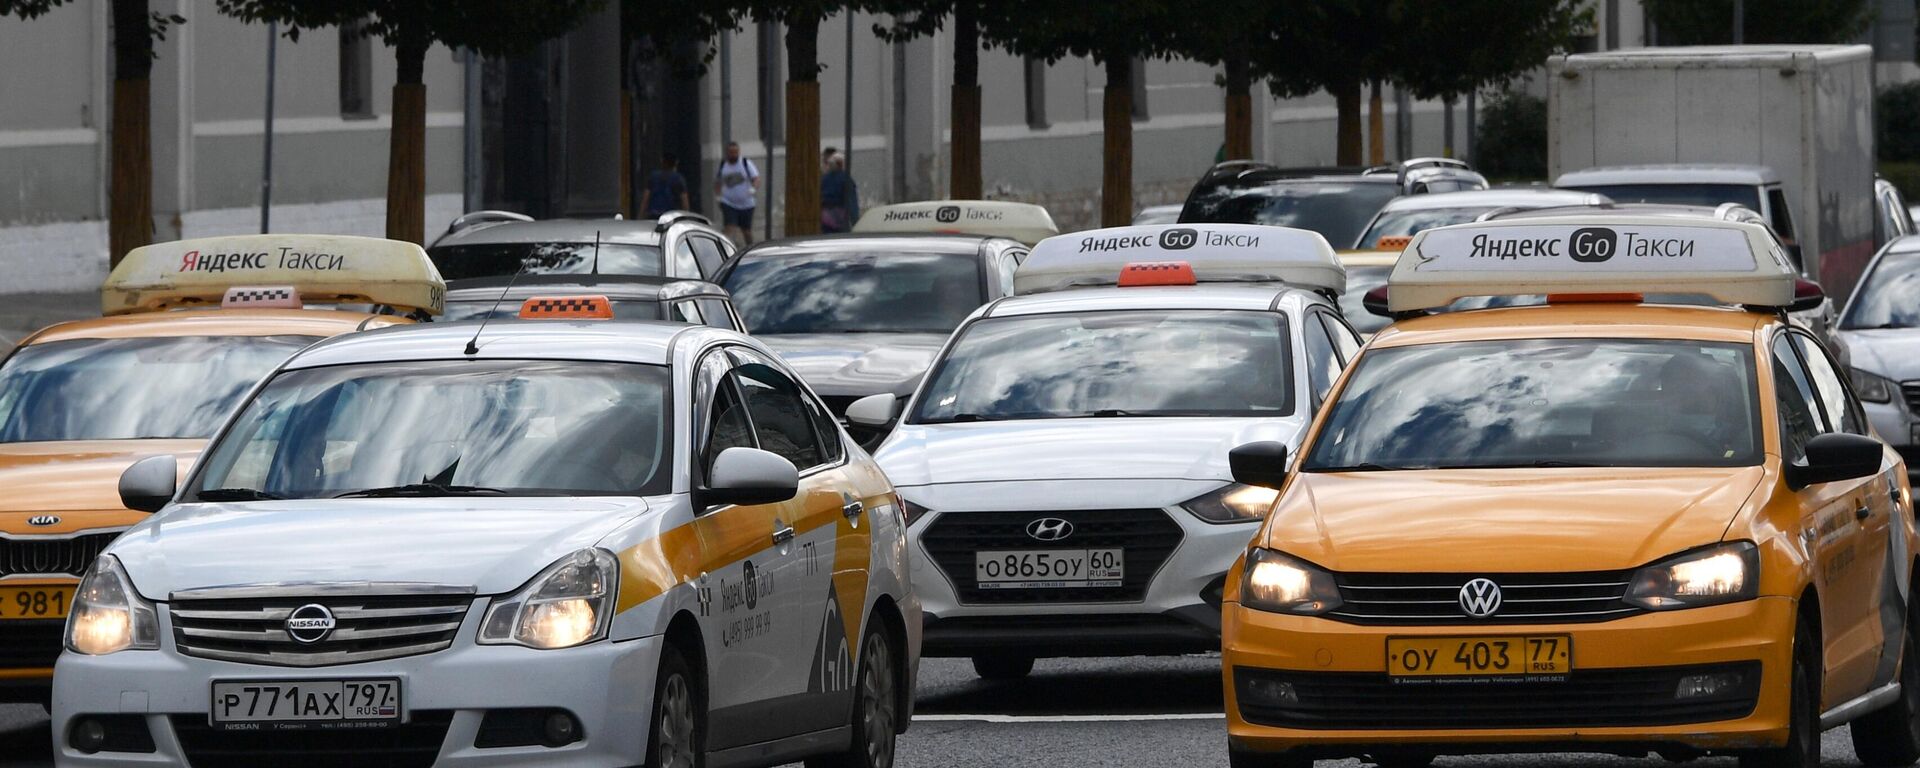 В Москве отложили мониторинг за таксистами - Sputnik Таджикистан, 1920, 09.08.2021